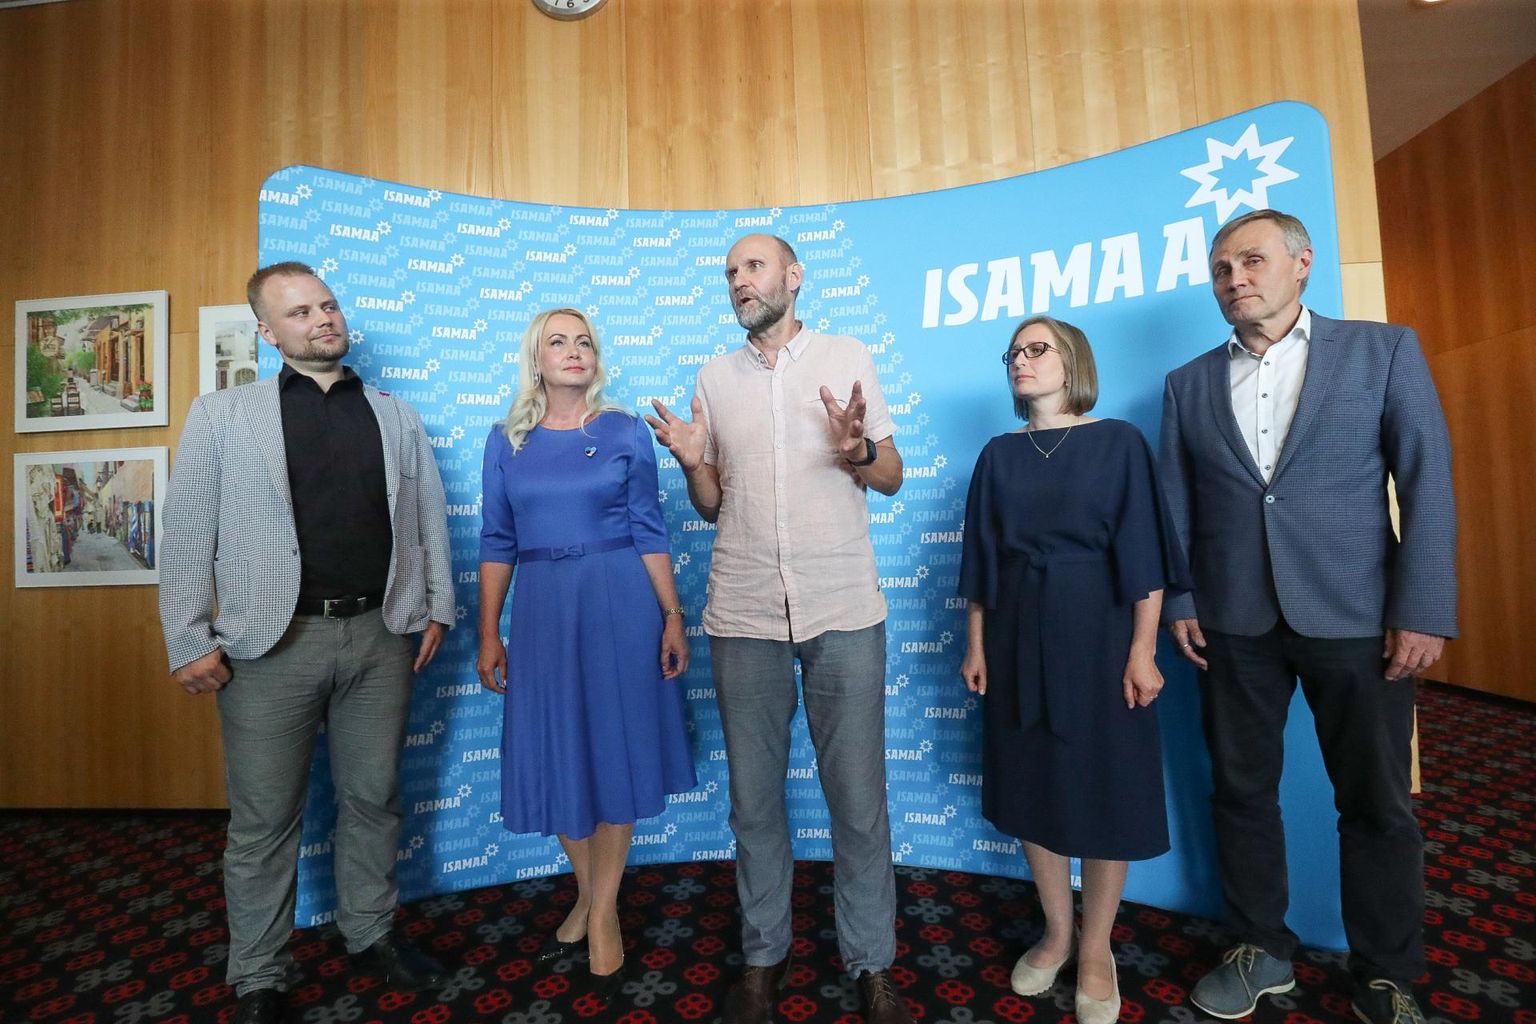 Kandidáti na ministry Isamaa. Helir-Valdor Seeder (centrum) představuje: Kristjan Järvan, Riina Solman, Lea Danilson-Järg, Tõnis Lukas.